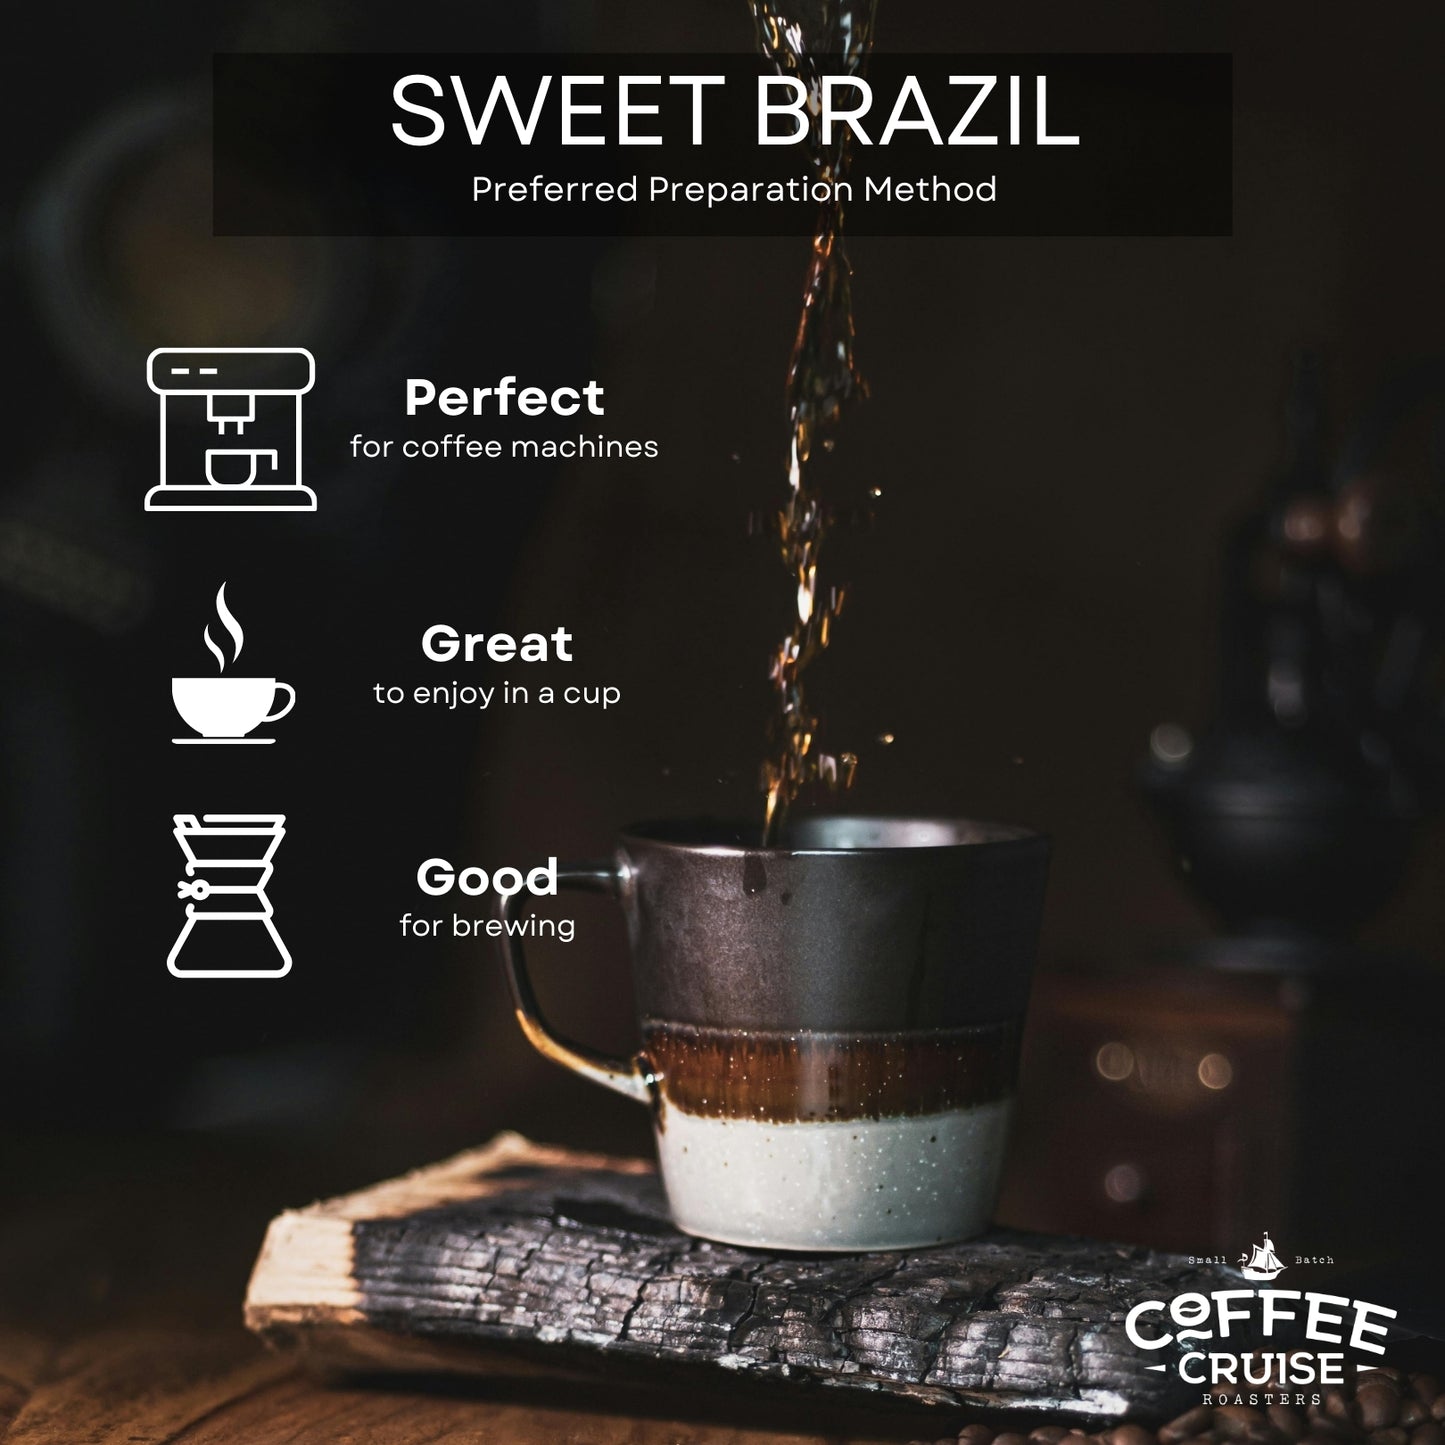 COFFEE CRUISE Sweet Brazil Brazilian Ground Coffee 250g - Medium Roasting - Aroma Cocoa and chocolate - For All Coffee Machines - 100% Arabica